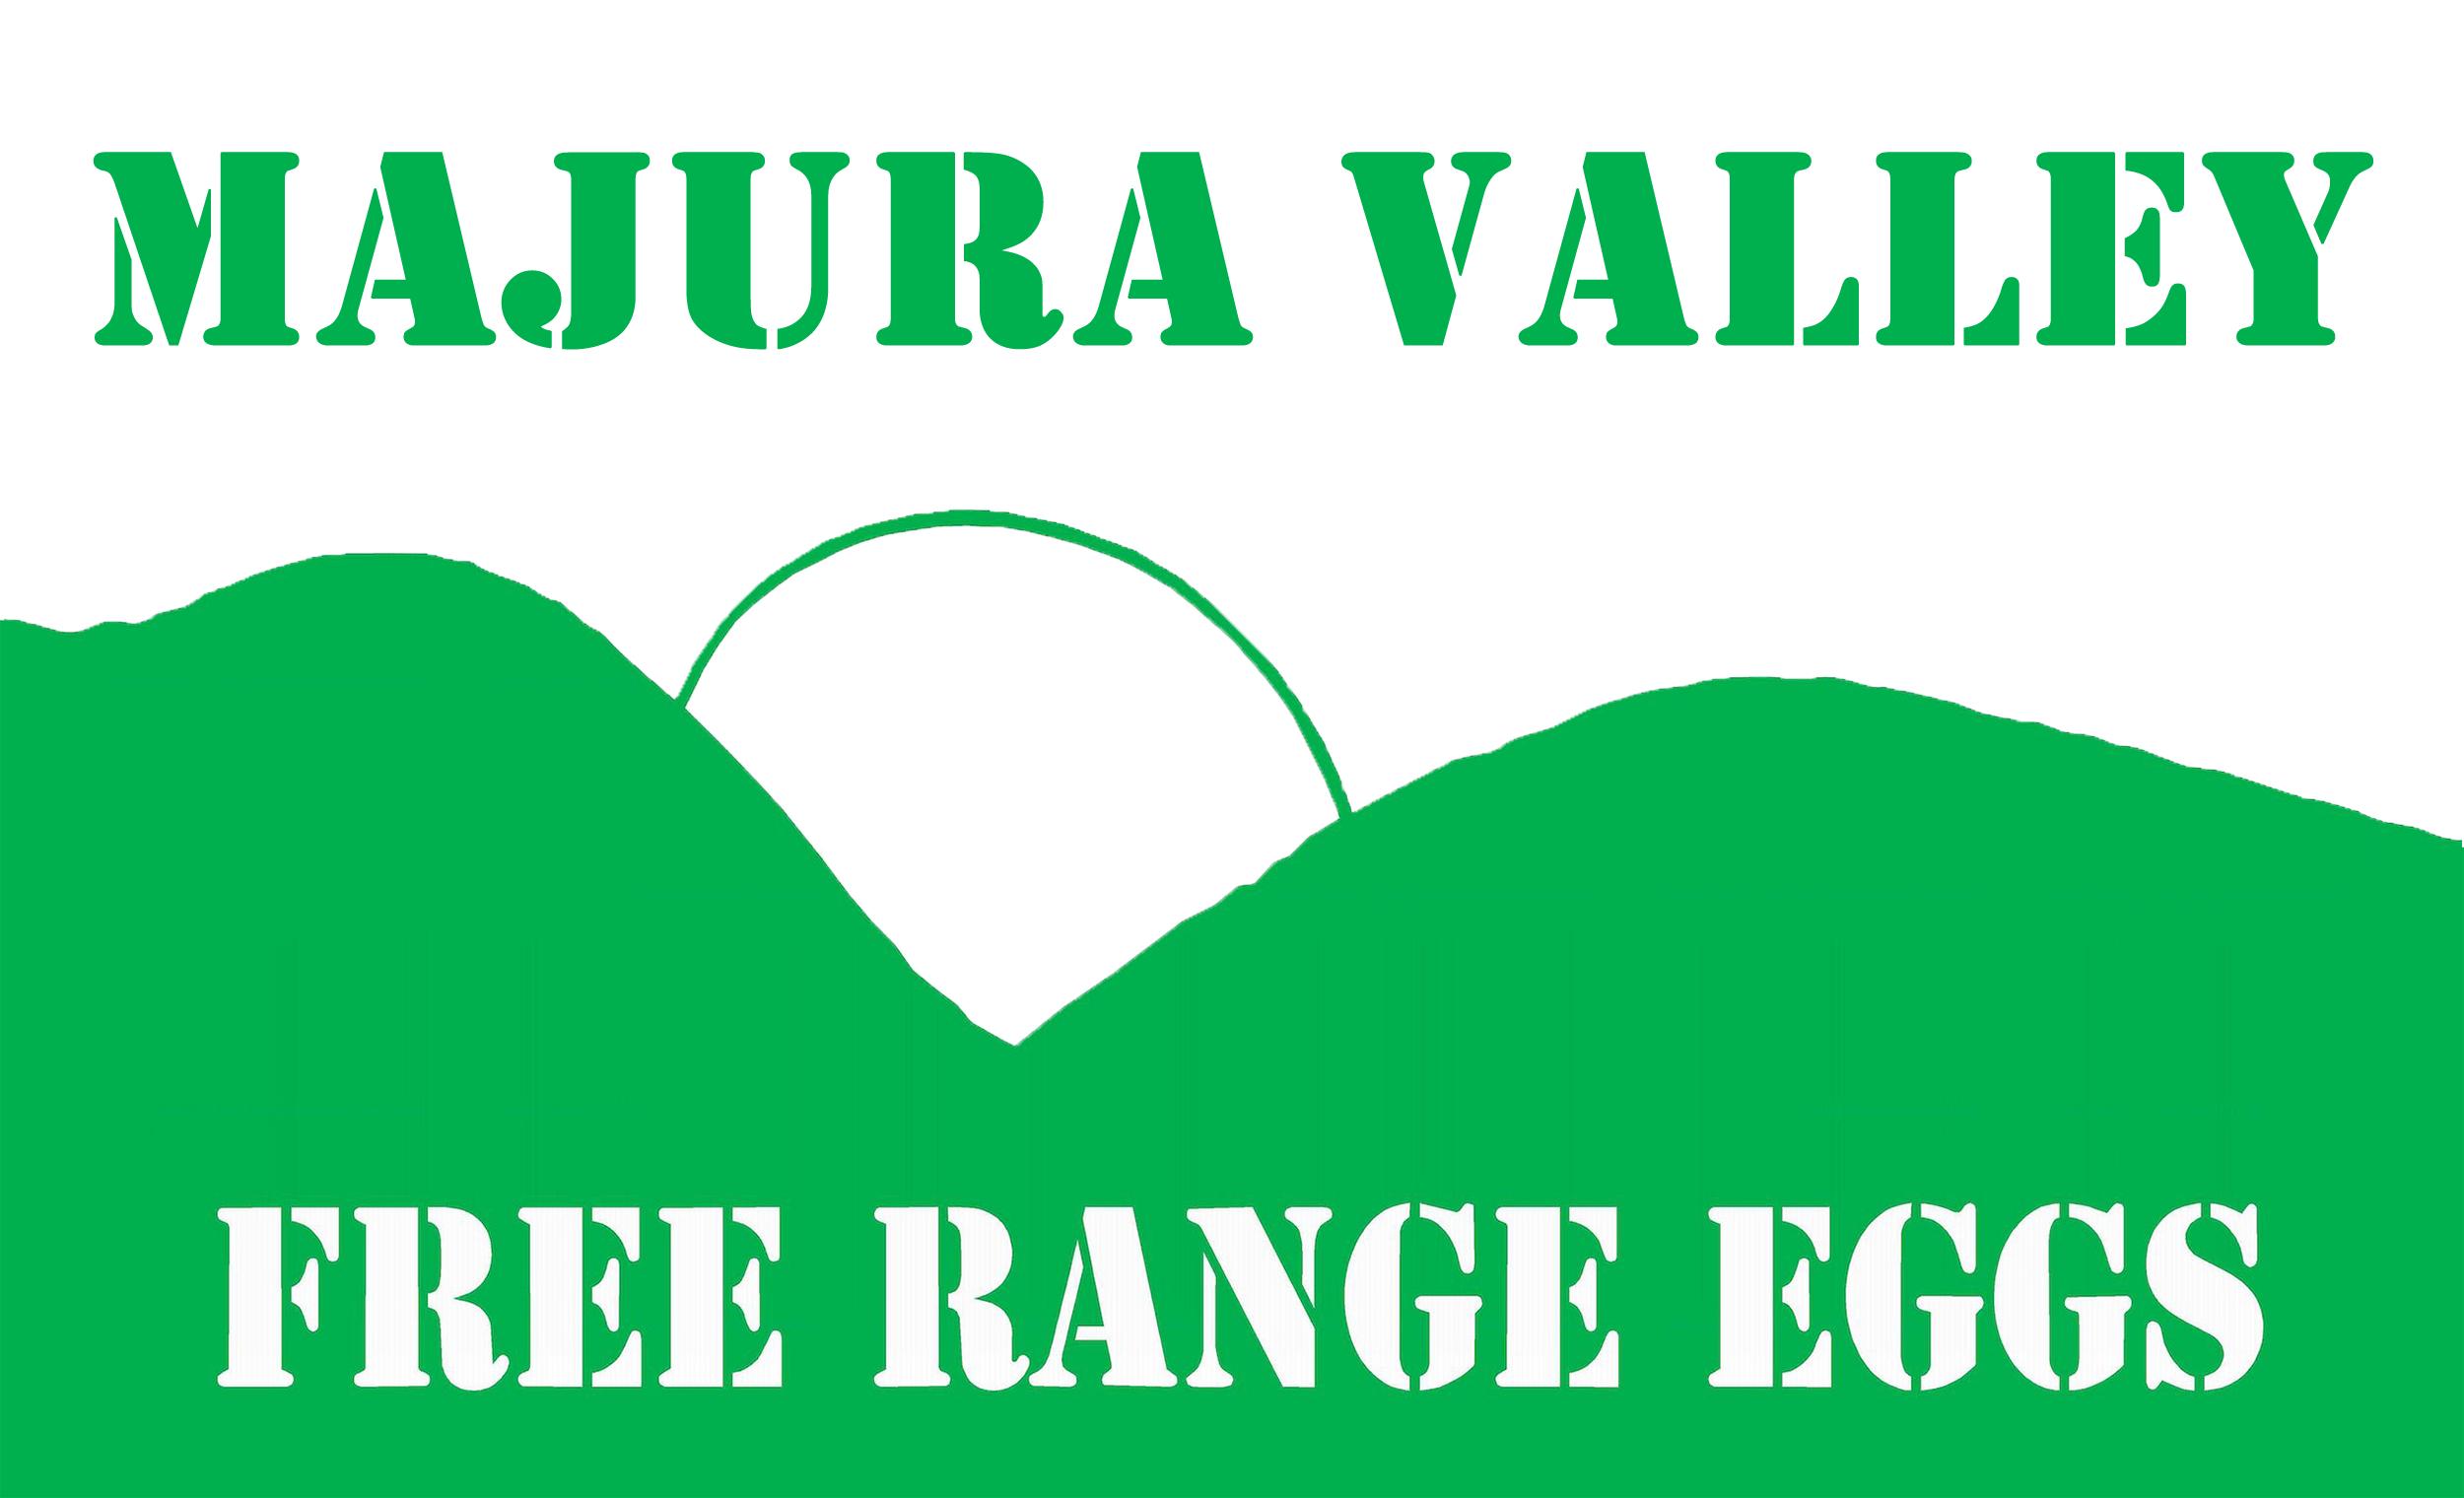 Majura Valley Free Range Eggs